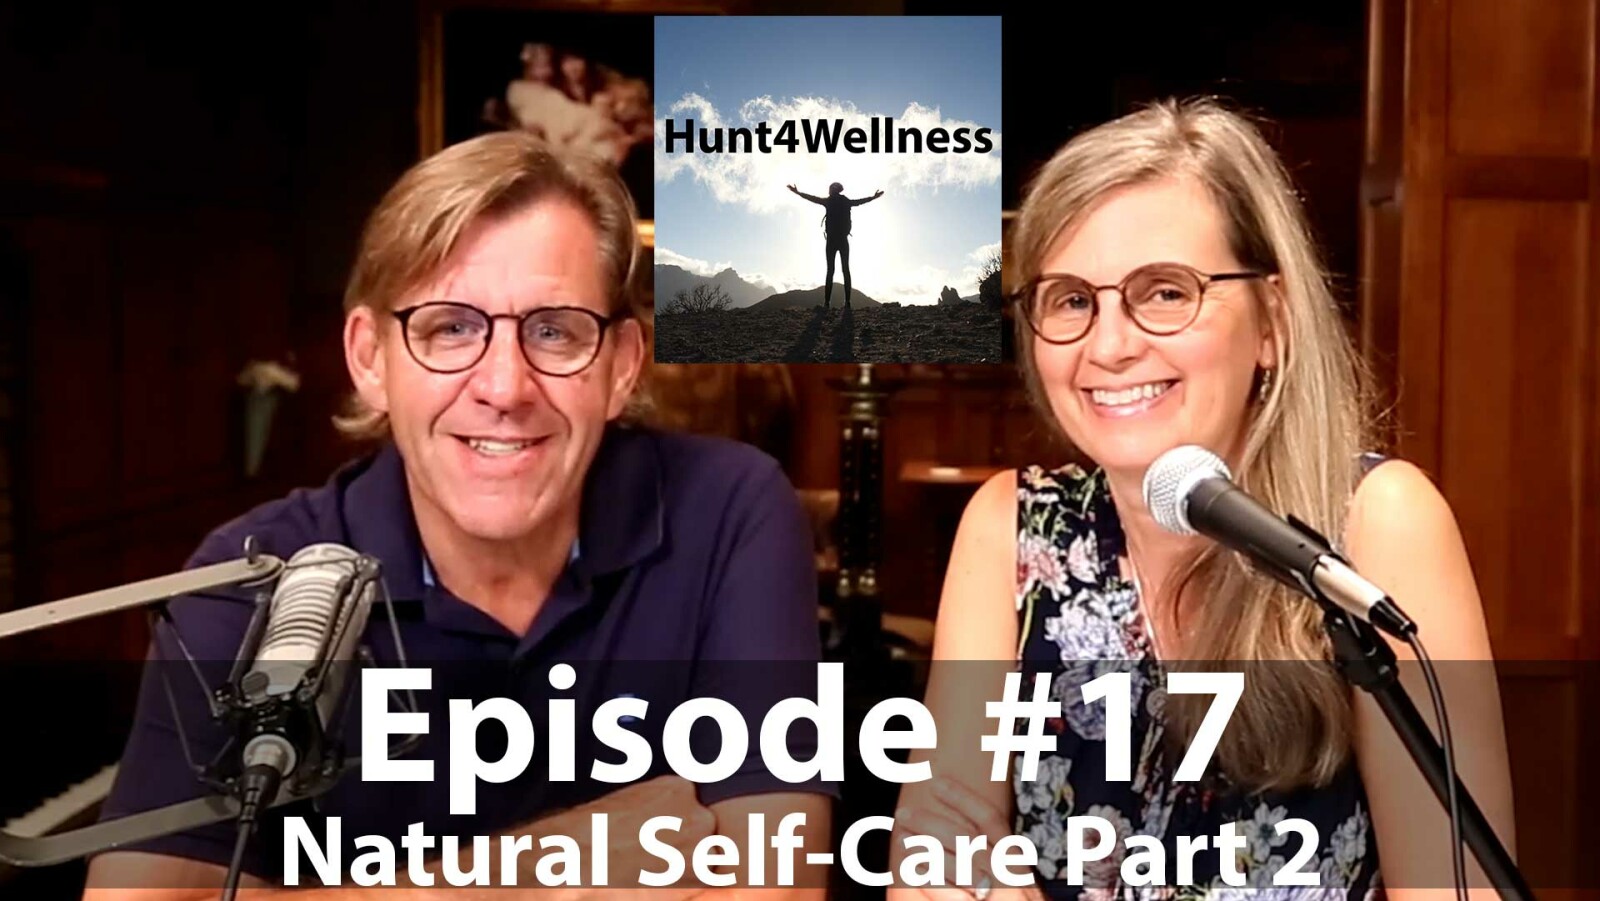 Episode #17 - Natural Self-Care Part 2